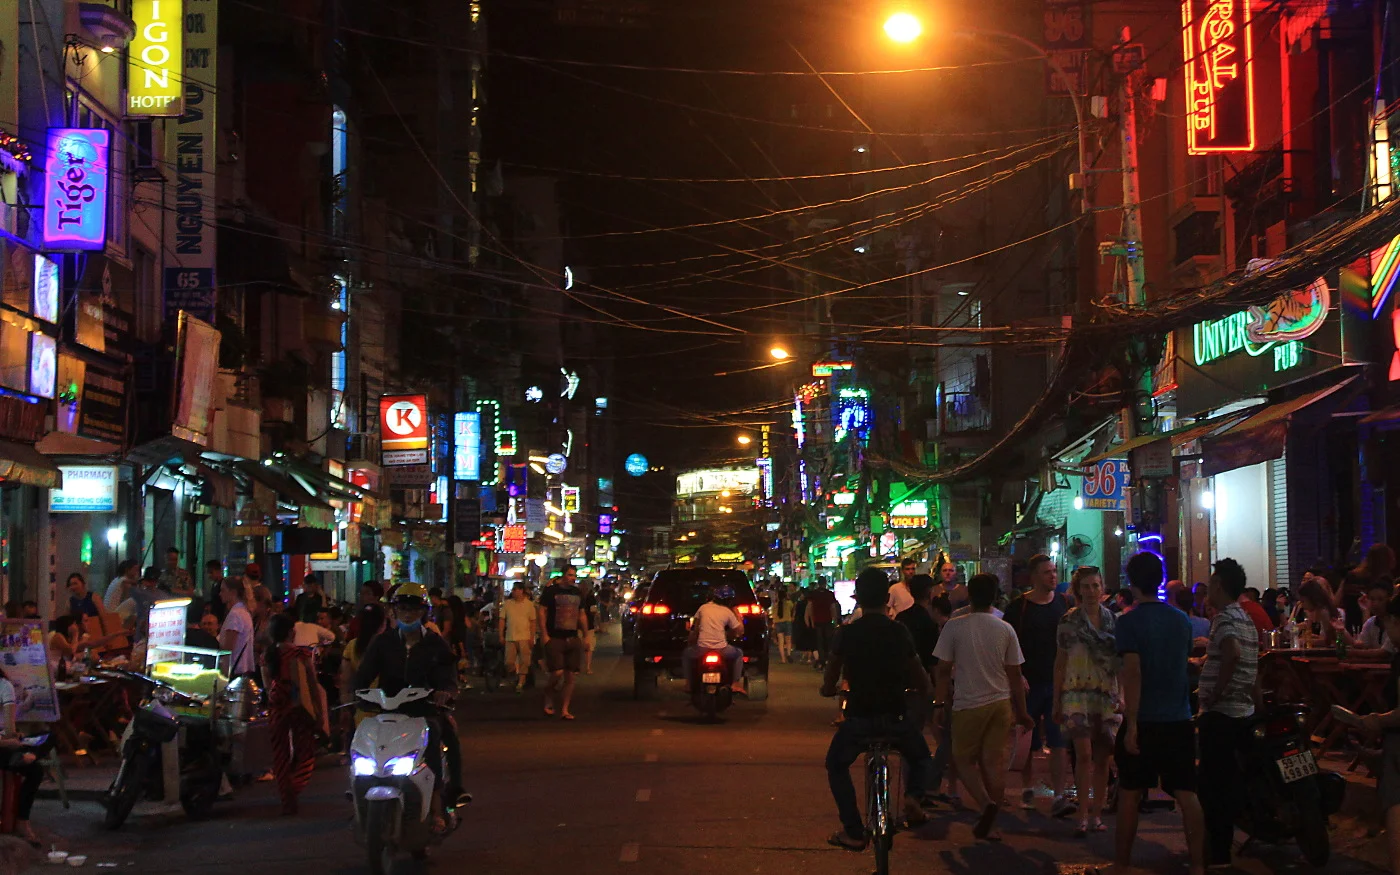 One week in Ho Chi Minh City (Saigon)